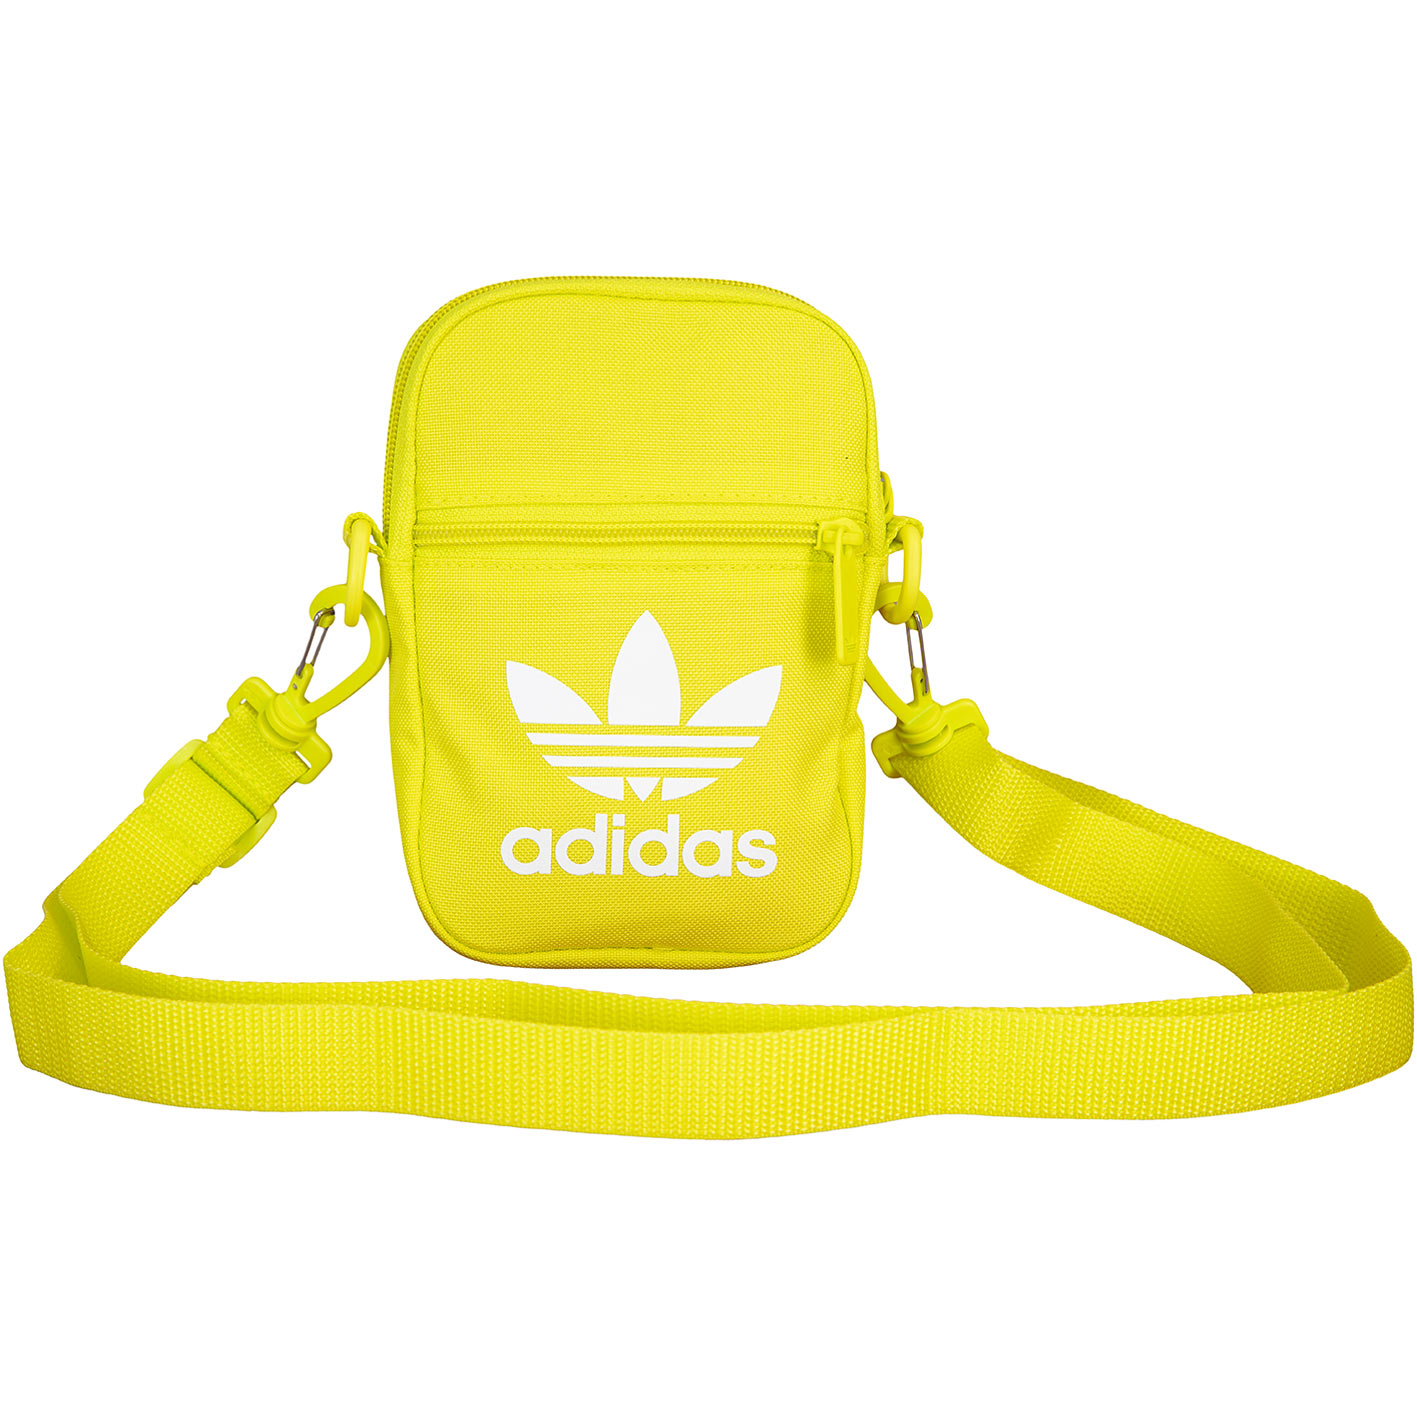 ☆ Adidas Festival Mini Bag Umhängetasche gelb - hier bestellen!